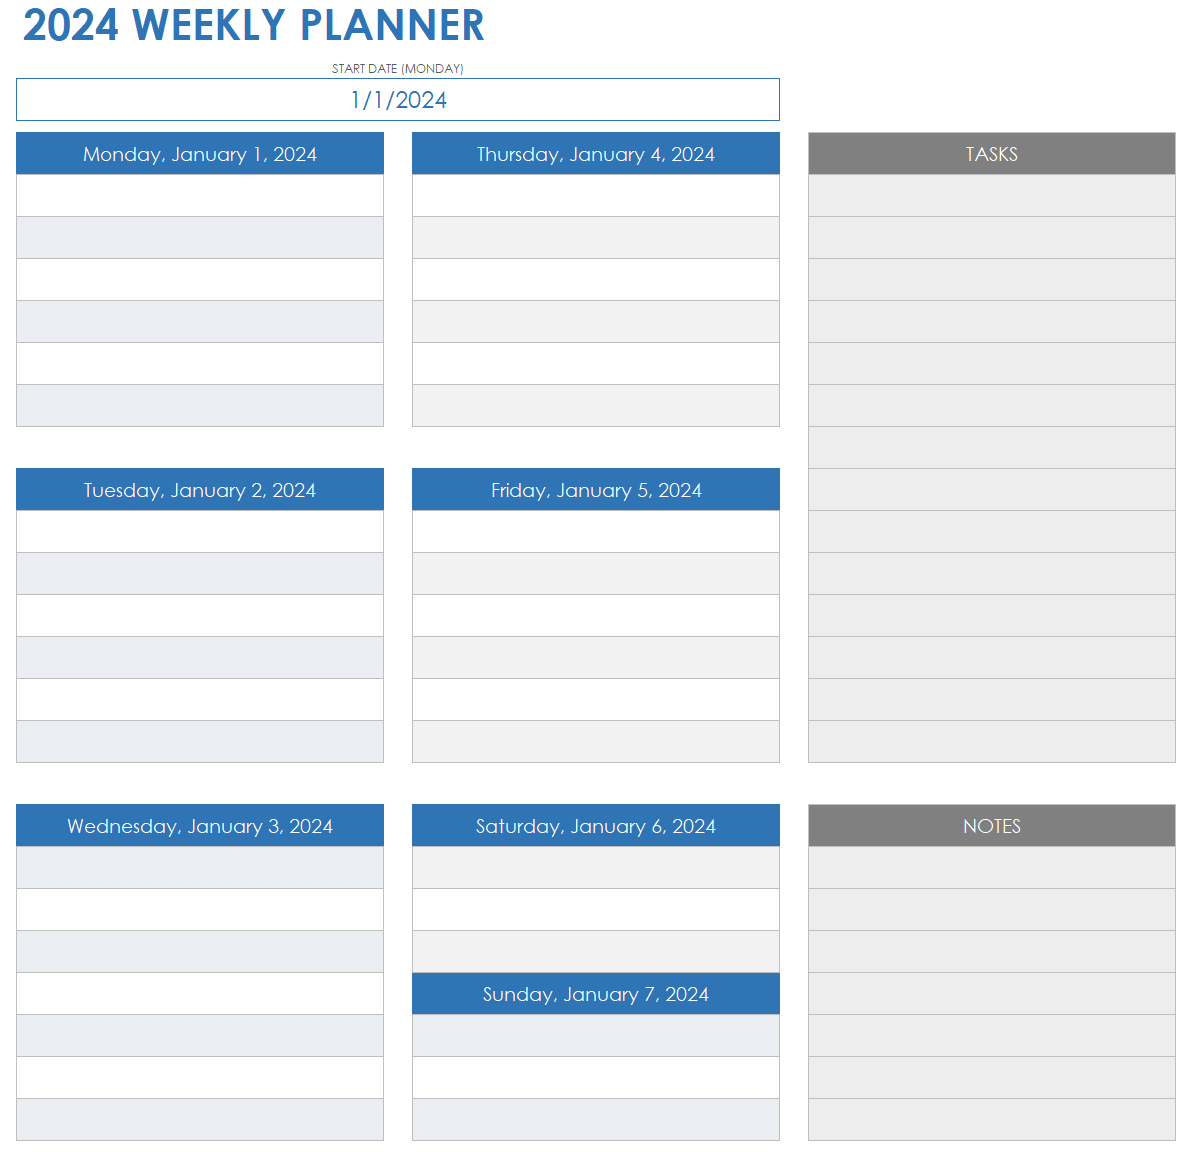 2024 Weekly Planner Template